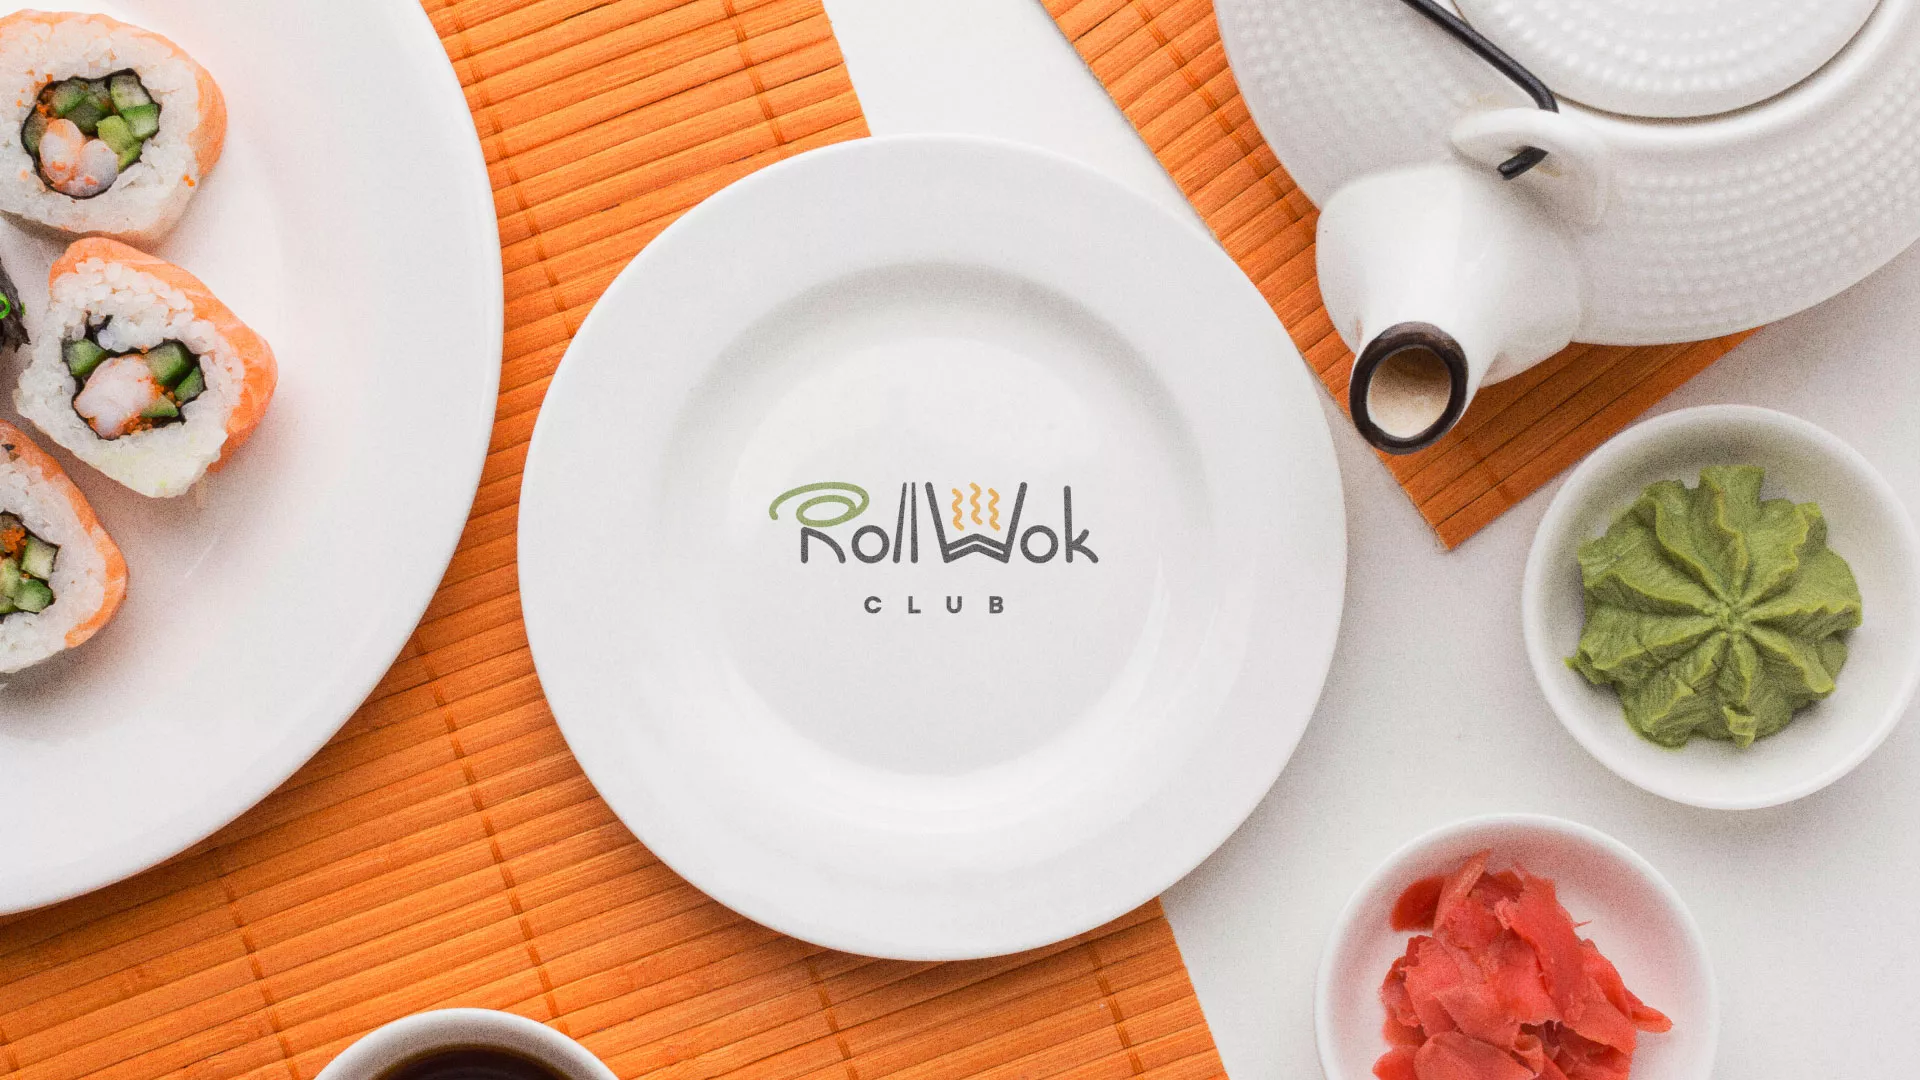 Разработка логотипа и фирменного стиля суши-бара «Roll Wok Club» в Юрьевце